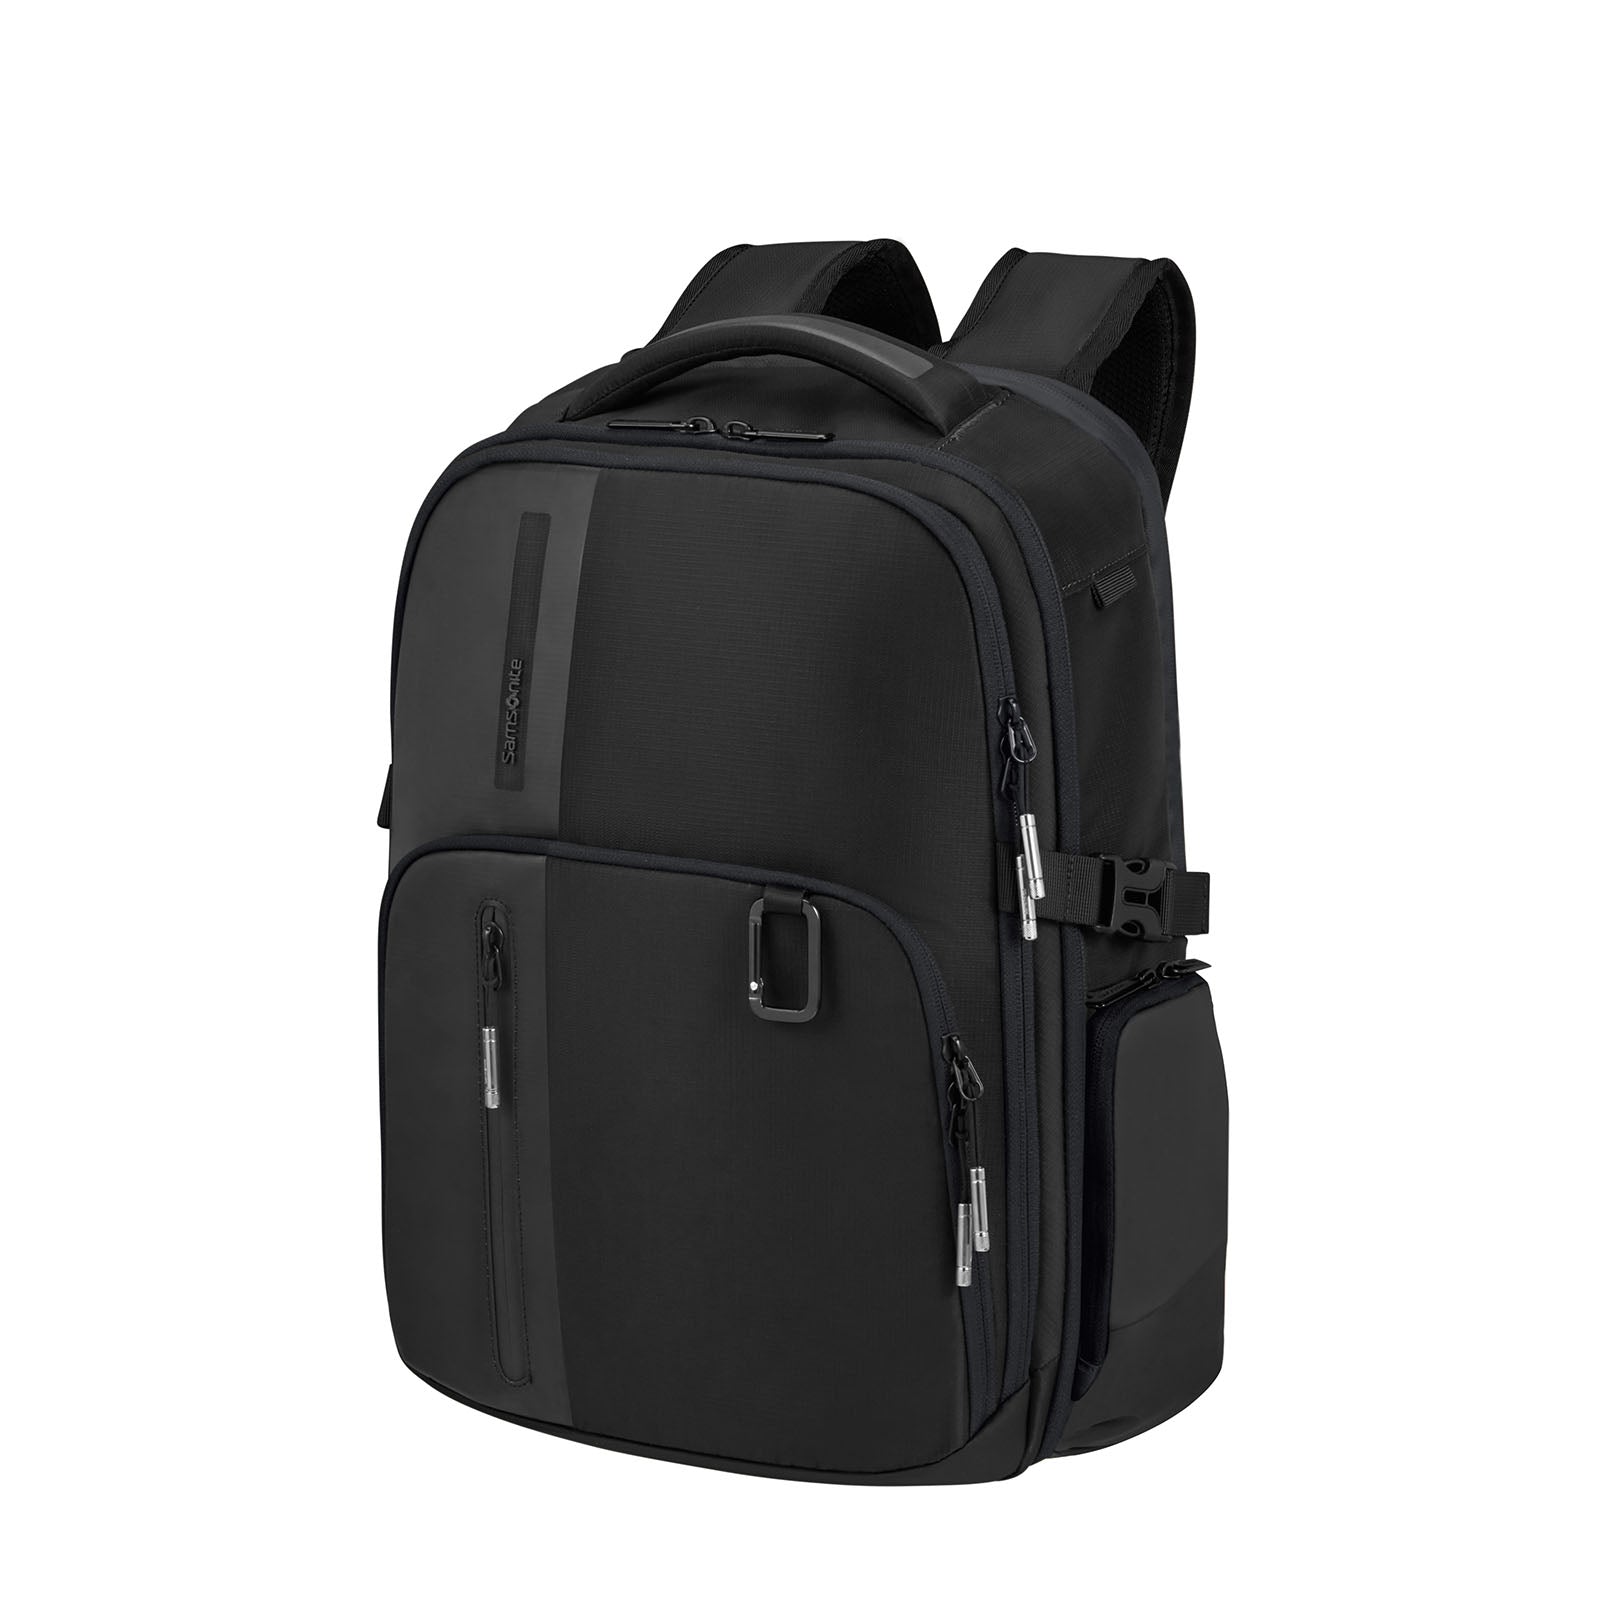 Samsonite-Biz2go-15-Inch-Laptop-Backpack-Black-Front-Angle